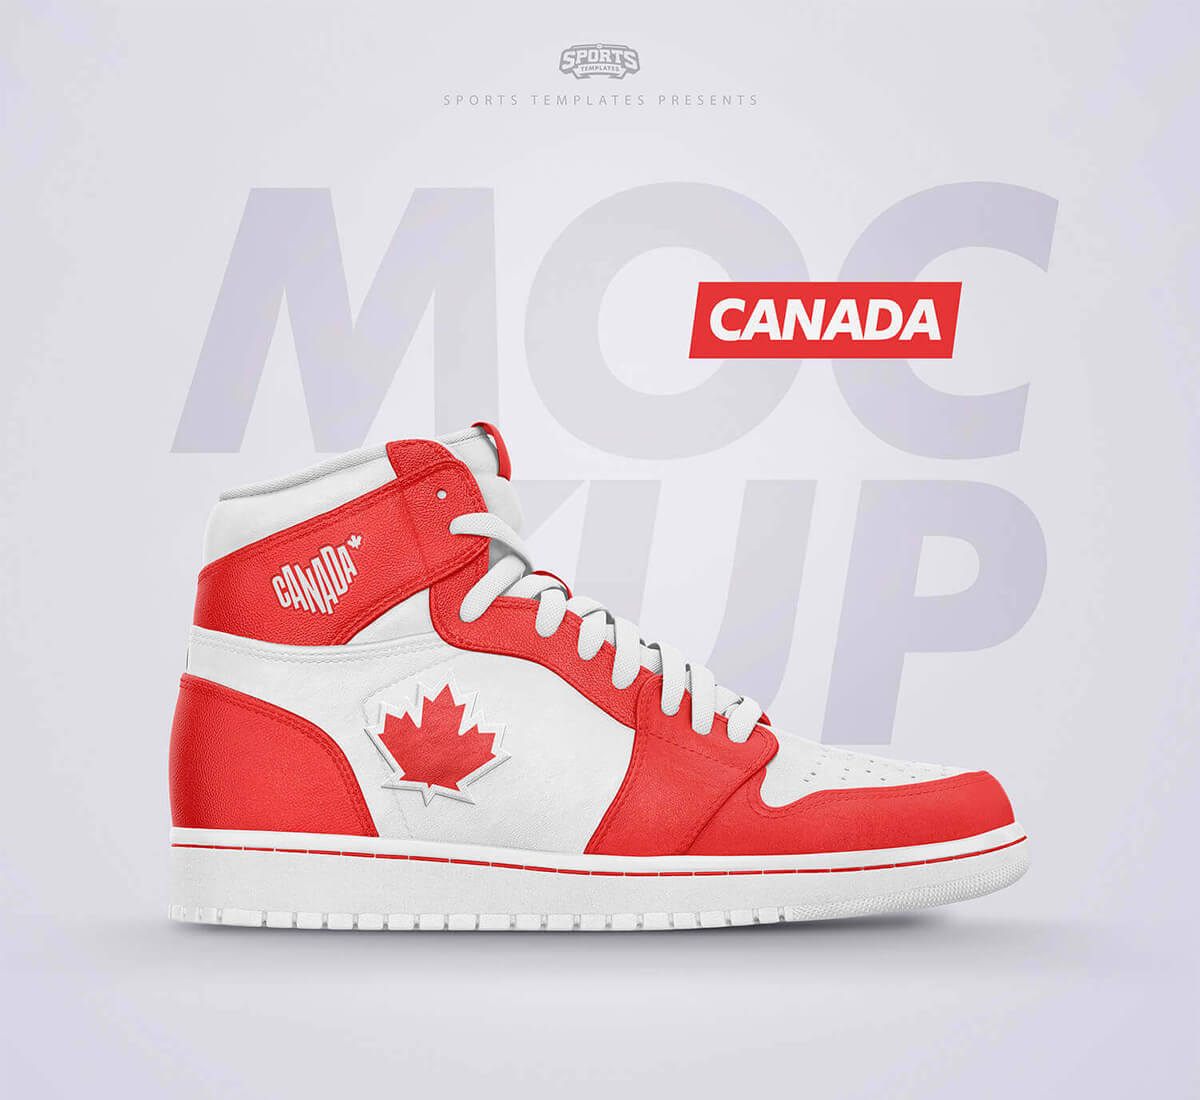 Canada-Nike-Air-Jordans-Photoshop-mockup-template